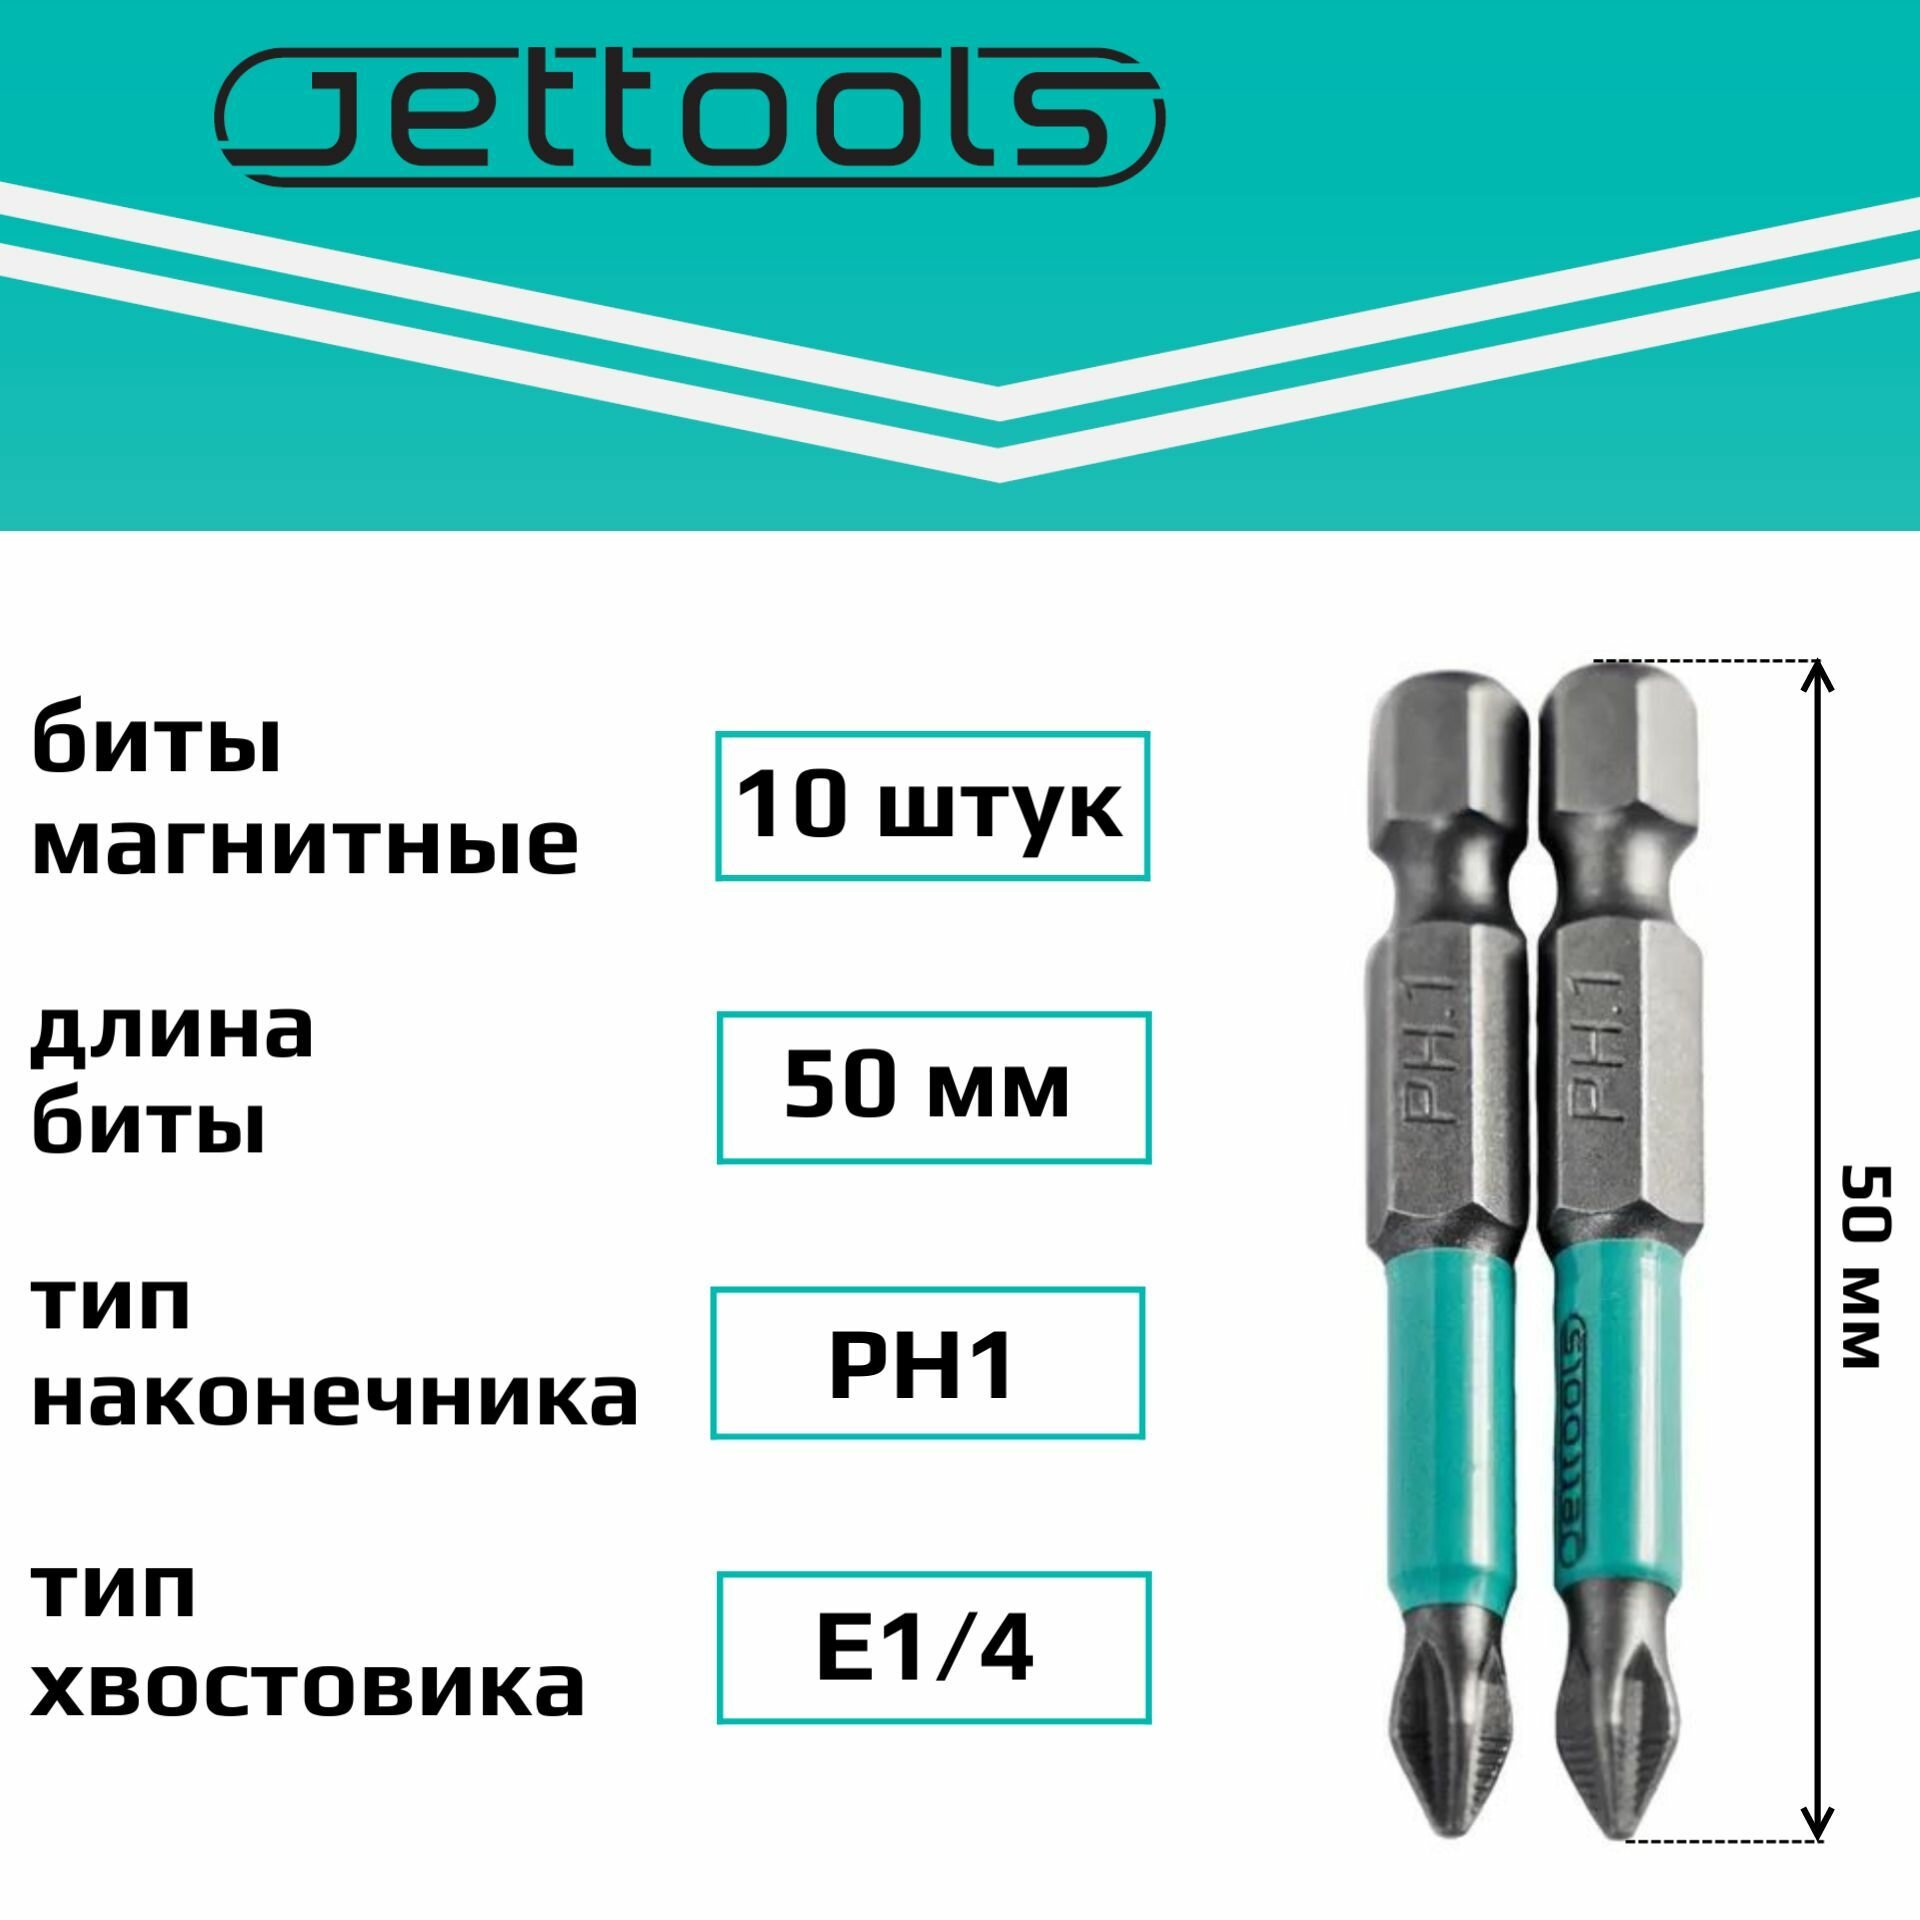 Бита PH1 50 мм Jettools магнитные для шуруповерта для больших нагрузок, 10 штук